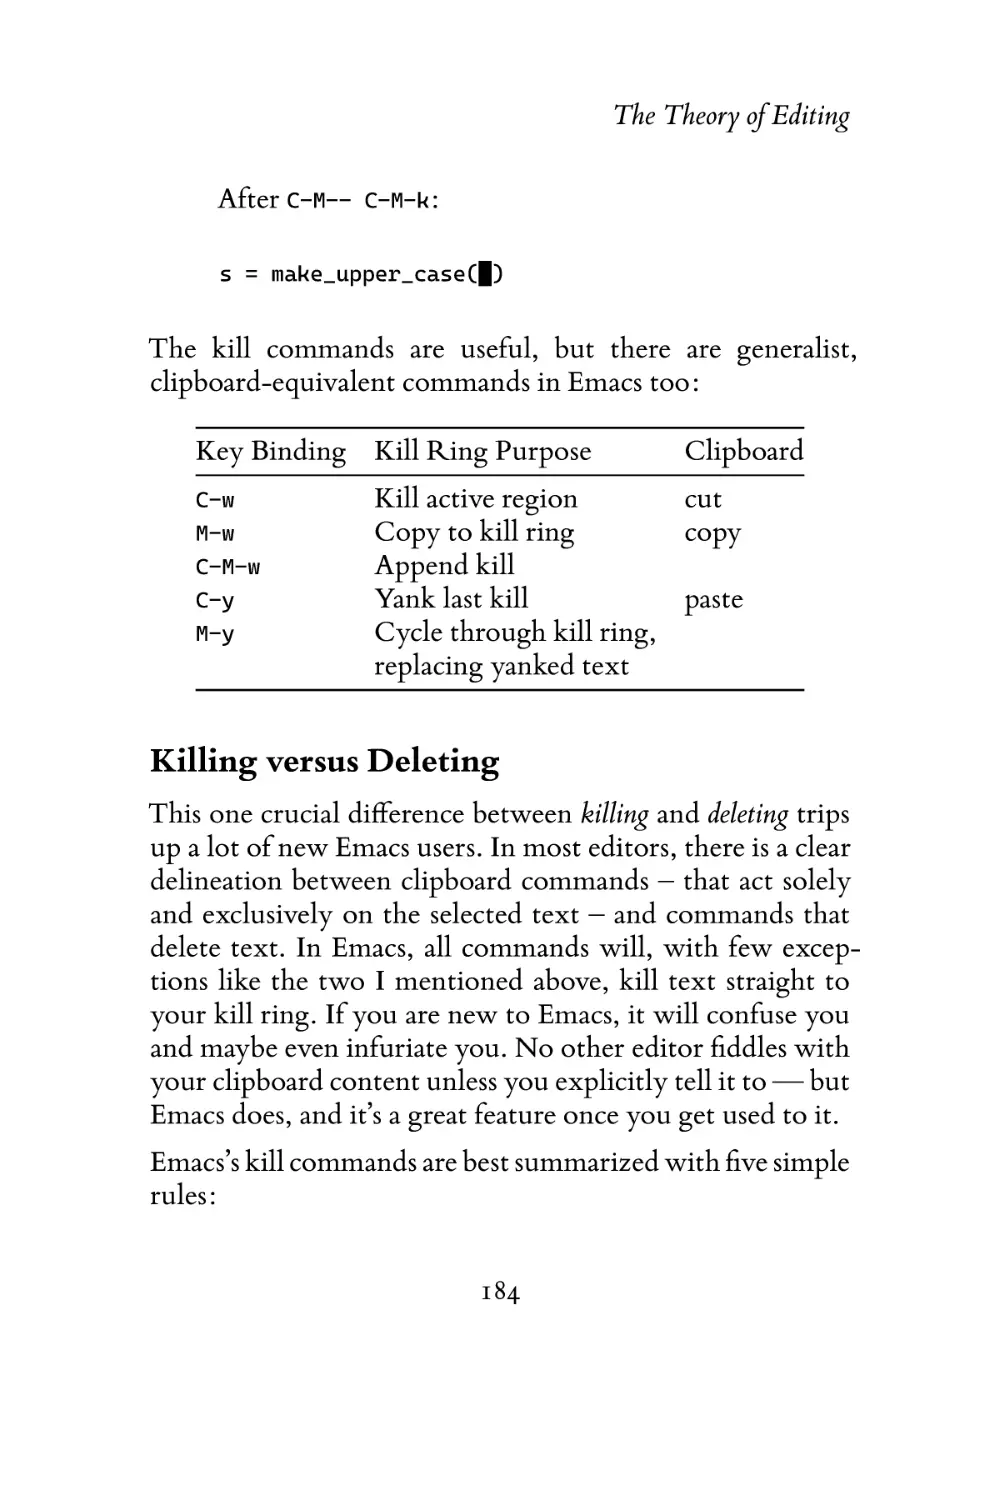 Killing versus Deleting